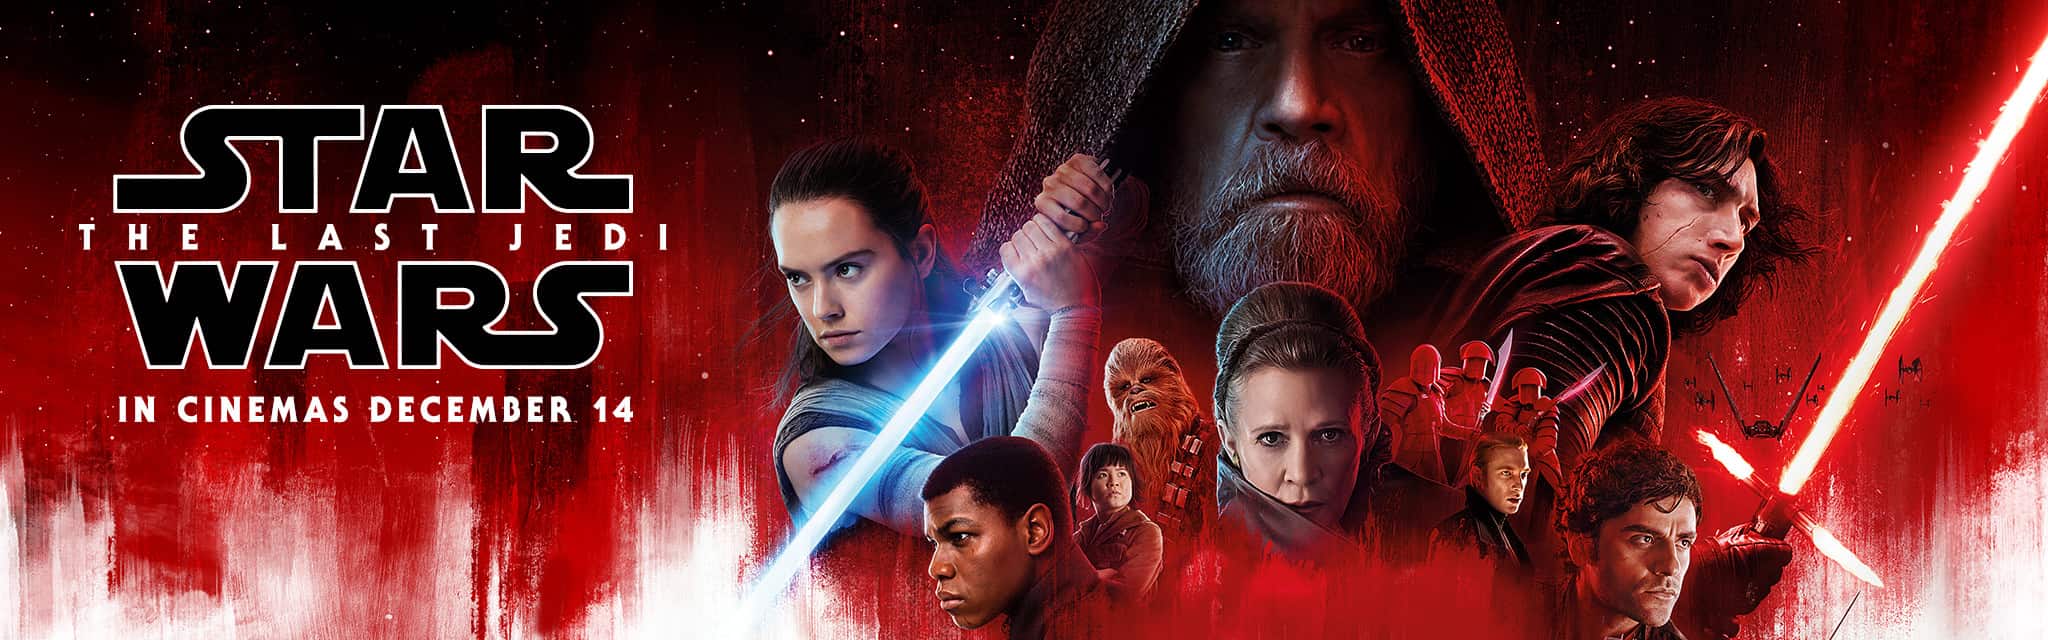 Star Wars Episode VIII - The Last Jedi 4K 2017 big poster